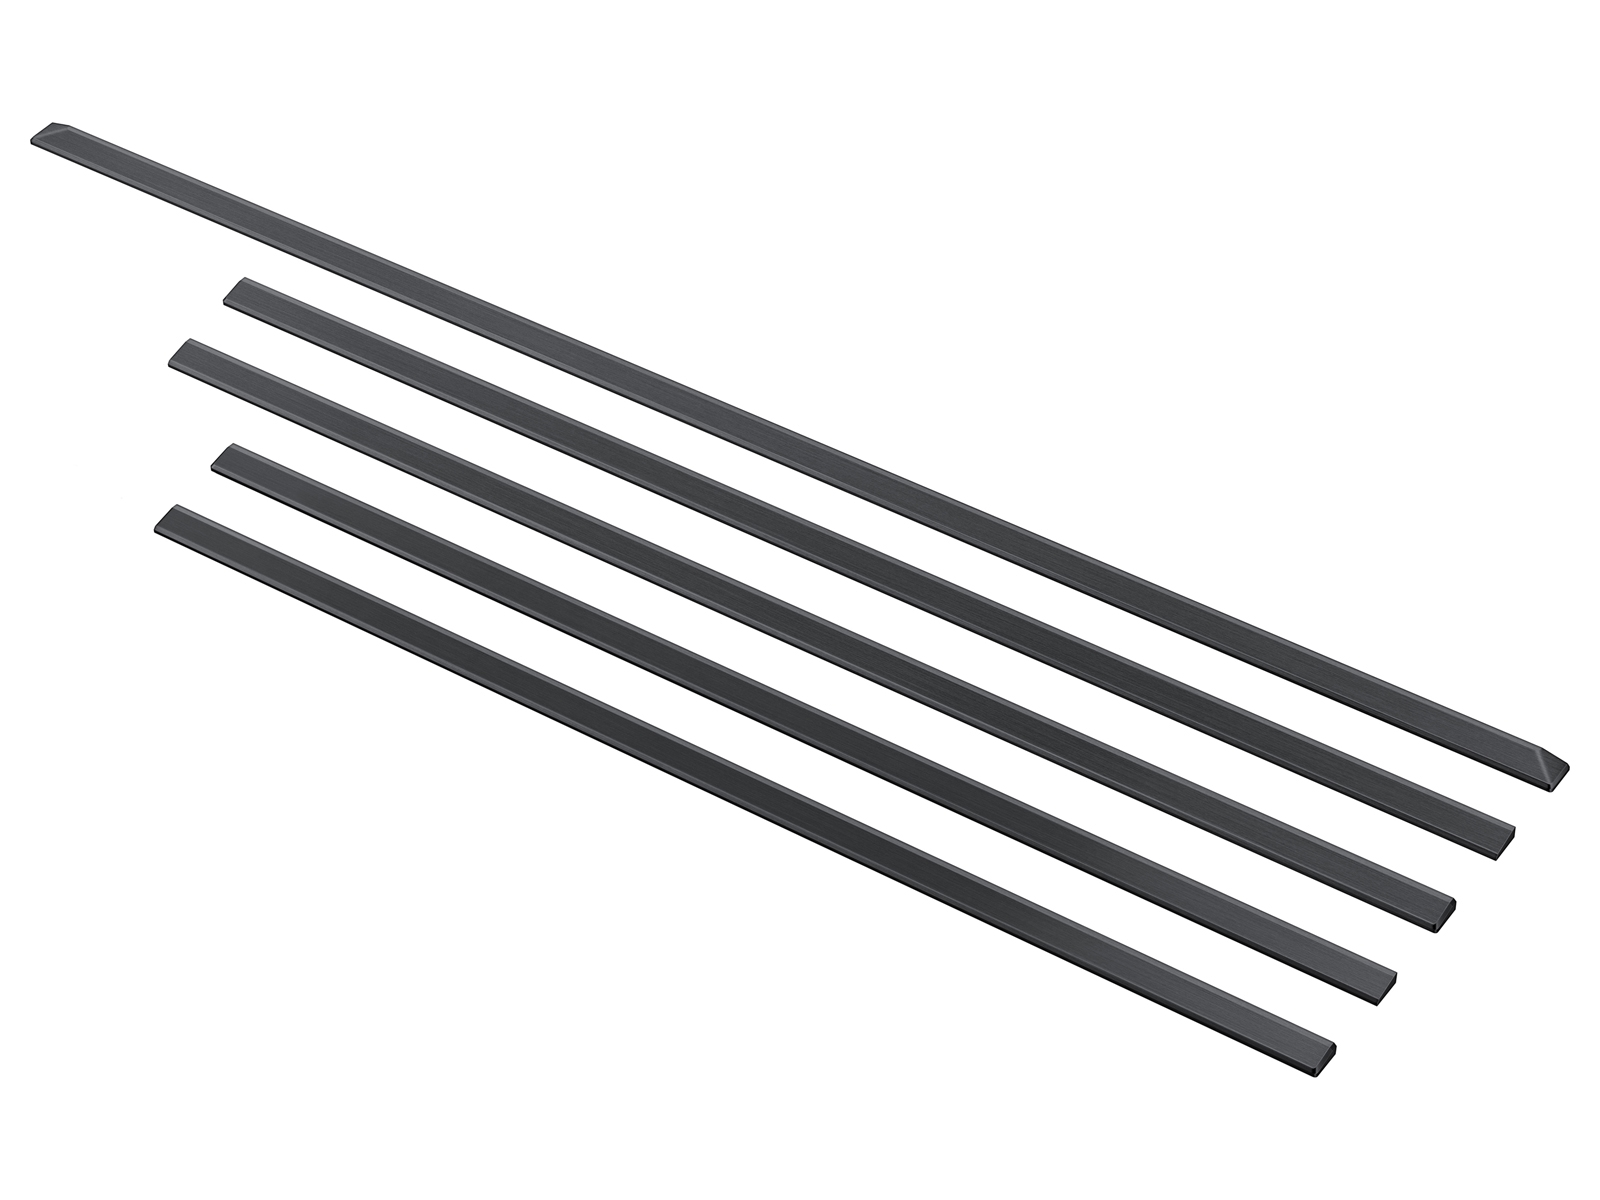 Trim Kit for 30” Slide in Range, 5 piece in Black Stainless Steel